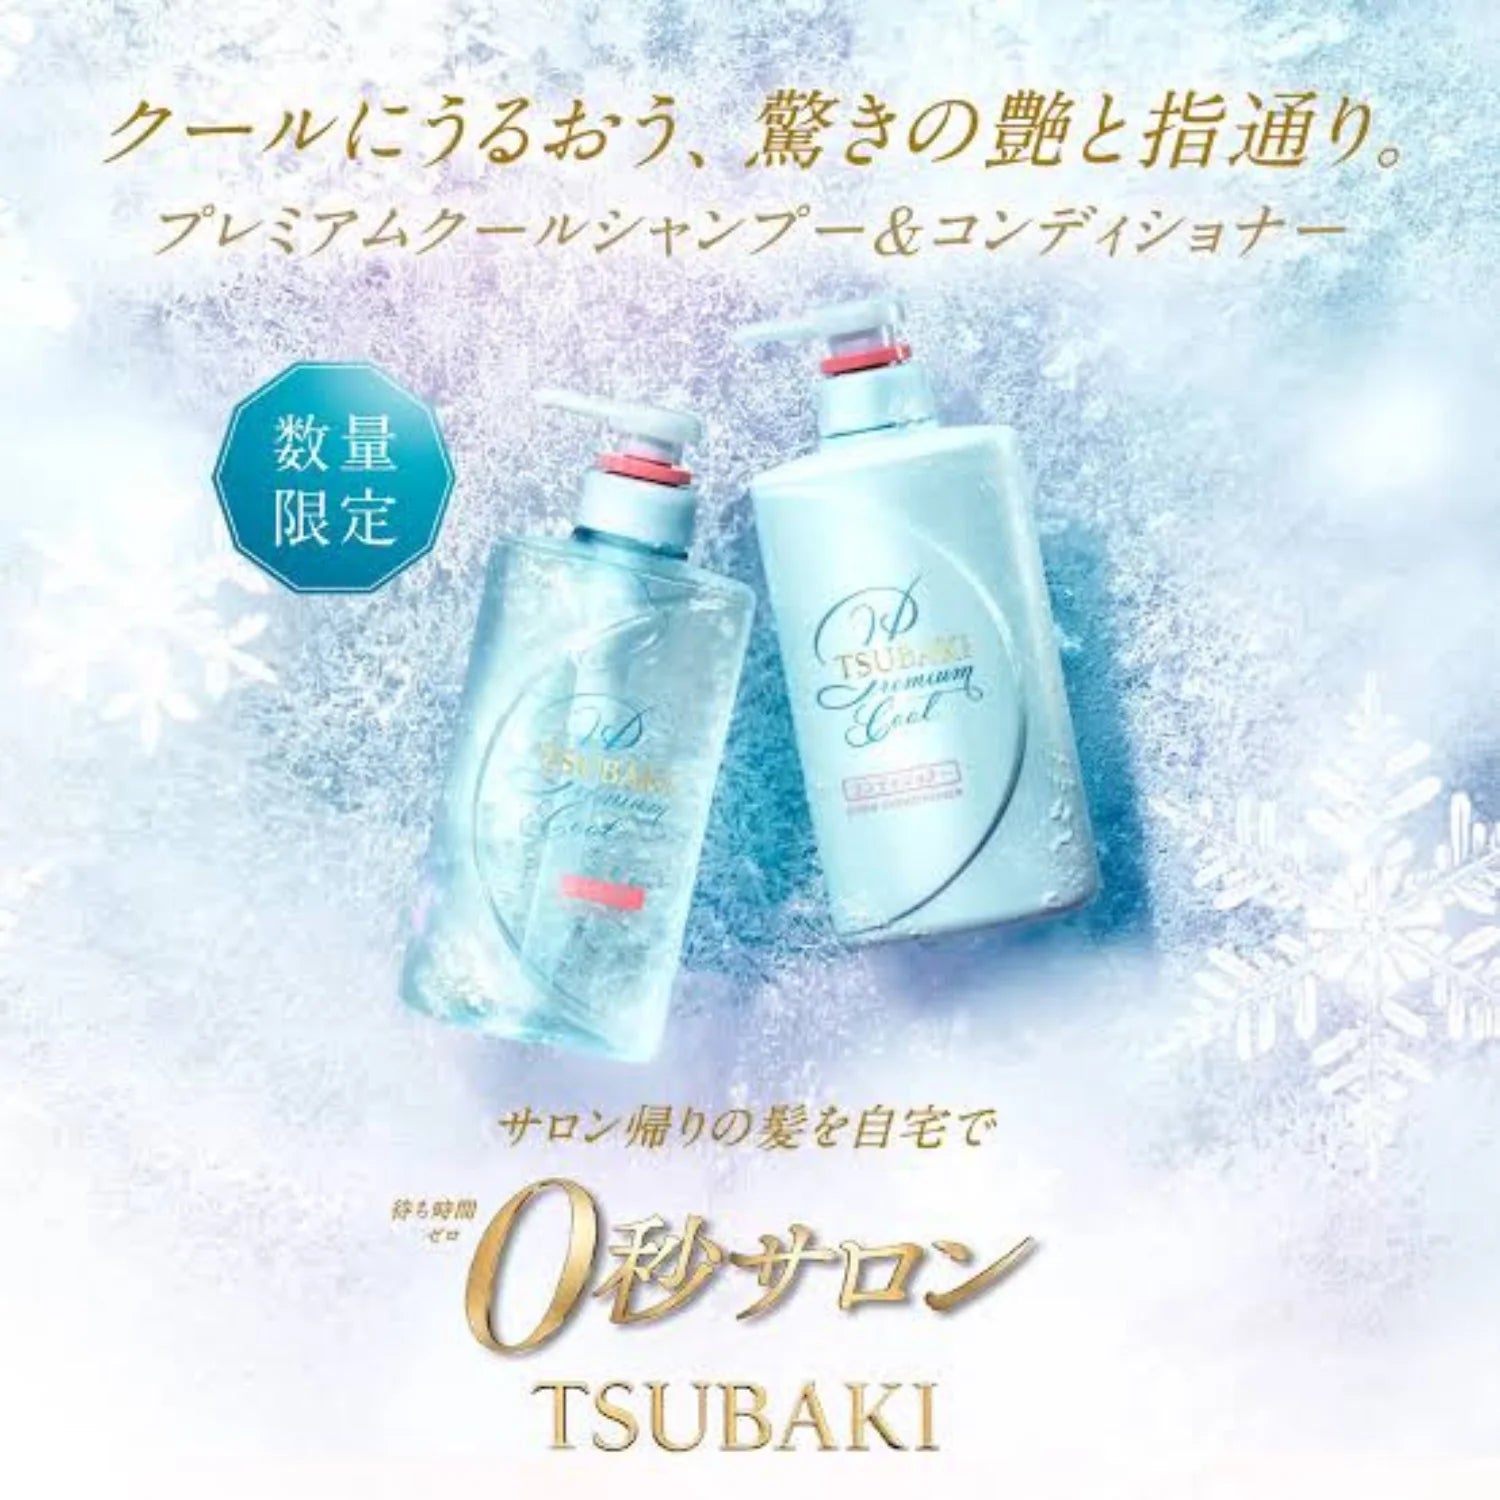 Tsubaki Premium Cool Set 490ml Each - Buy Me Japan